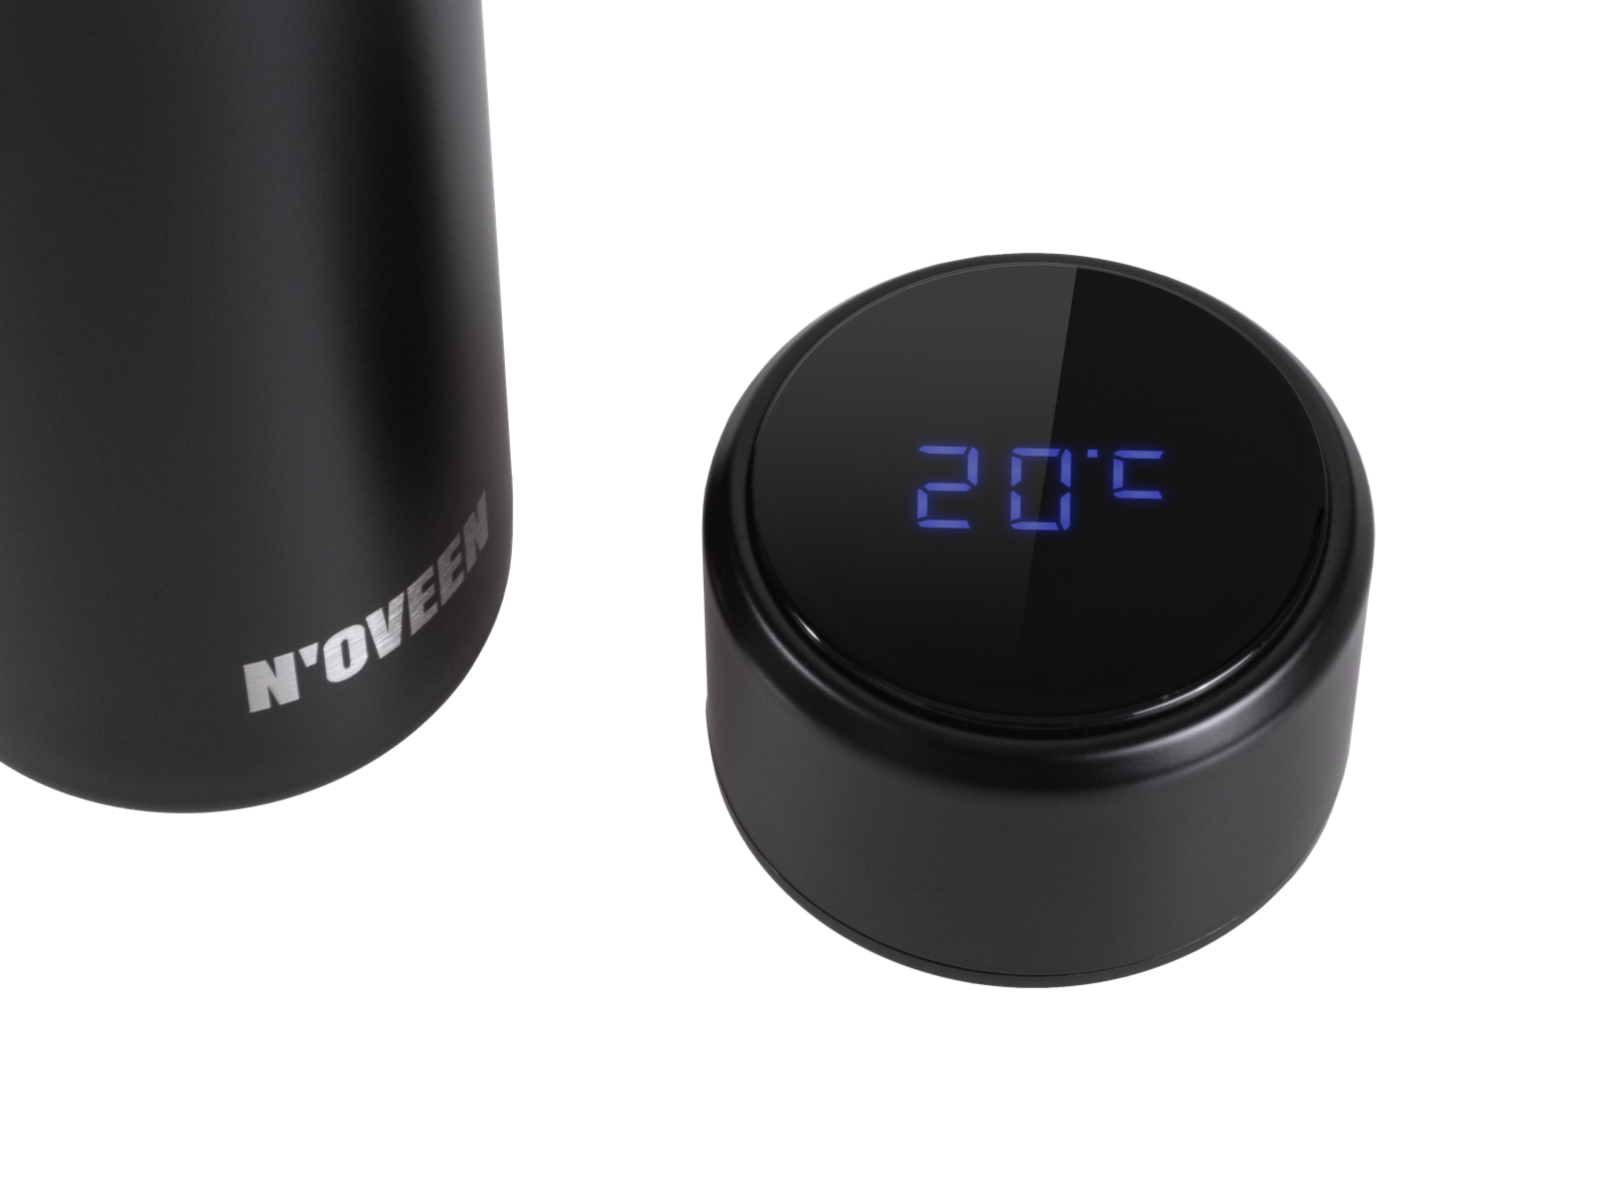 Smart termoflaske LED - 280 ml INOX, Svart